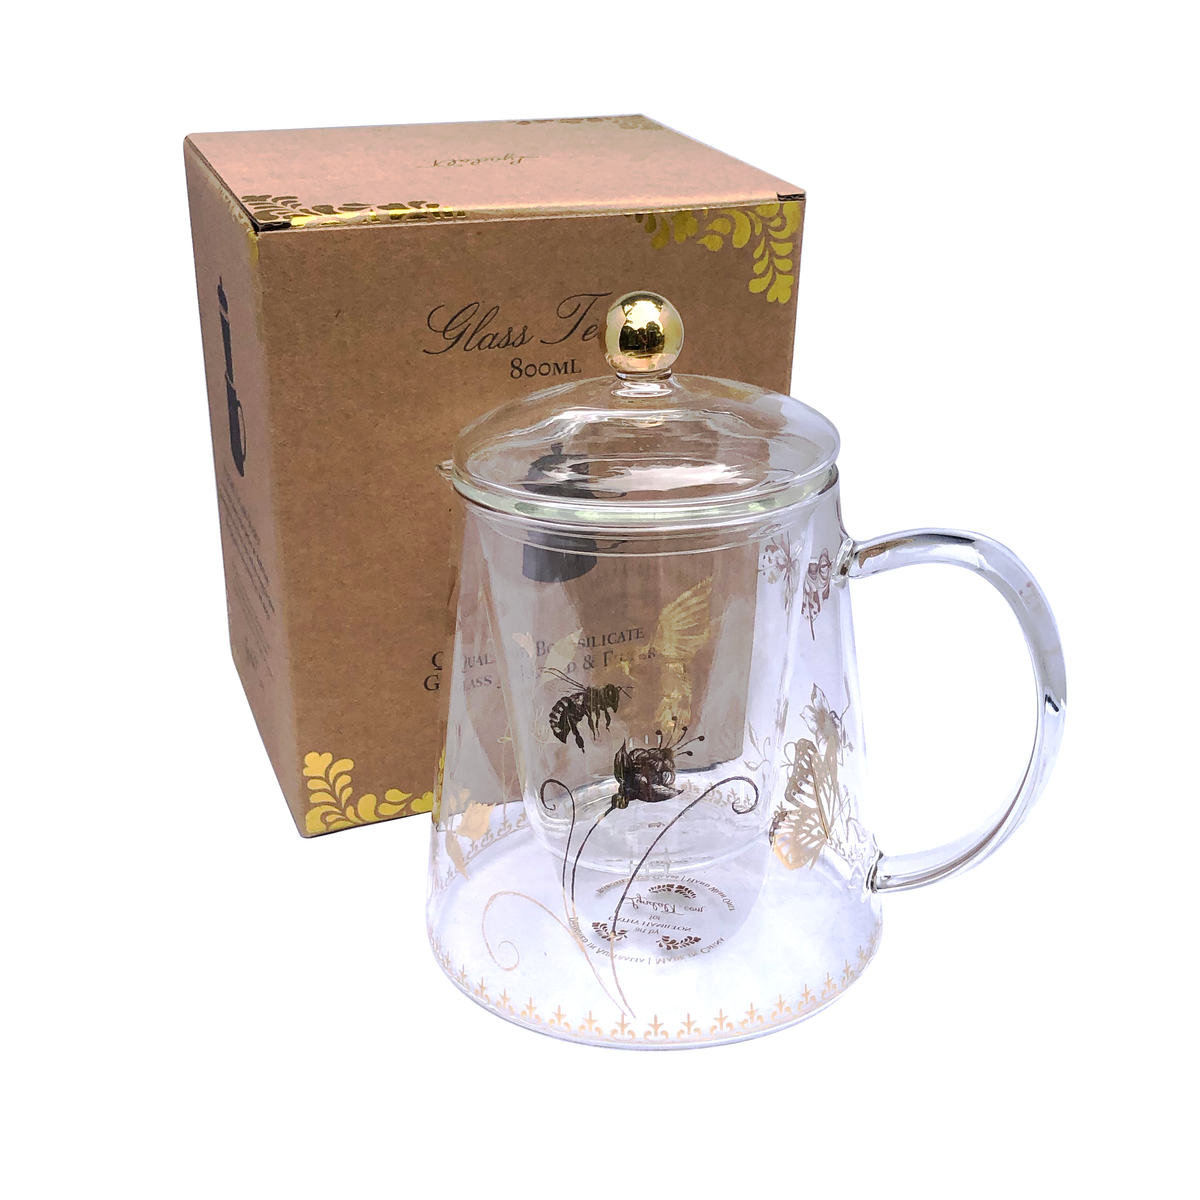 Glass Teapot in Garden theme – 800mL